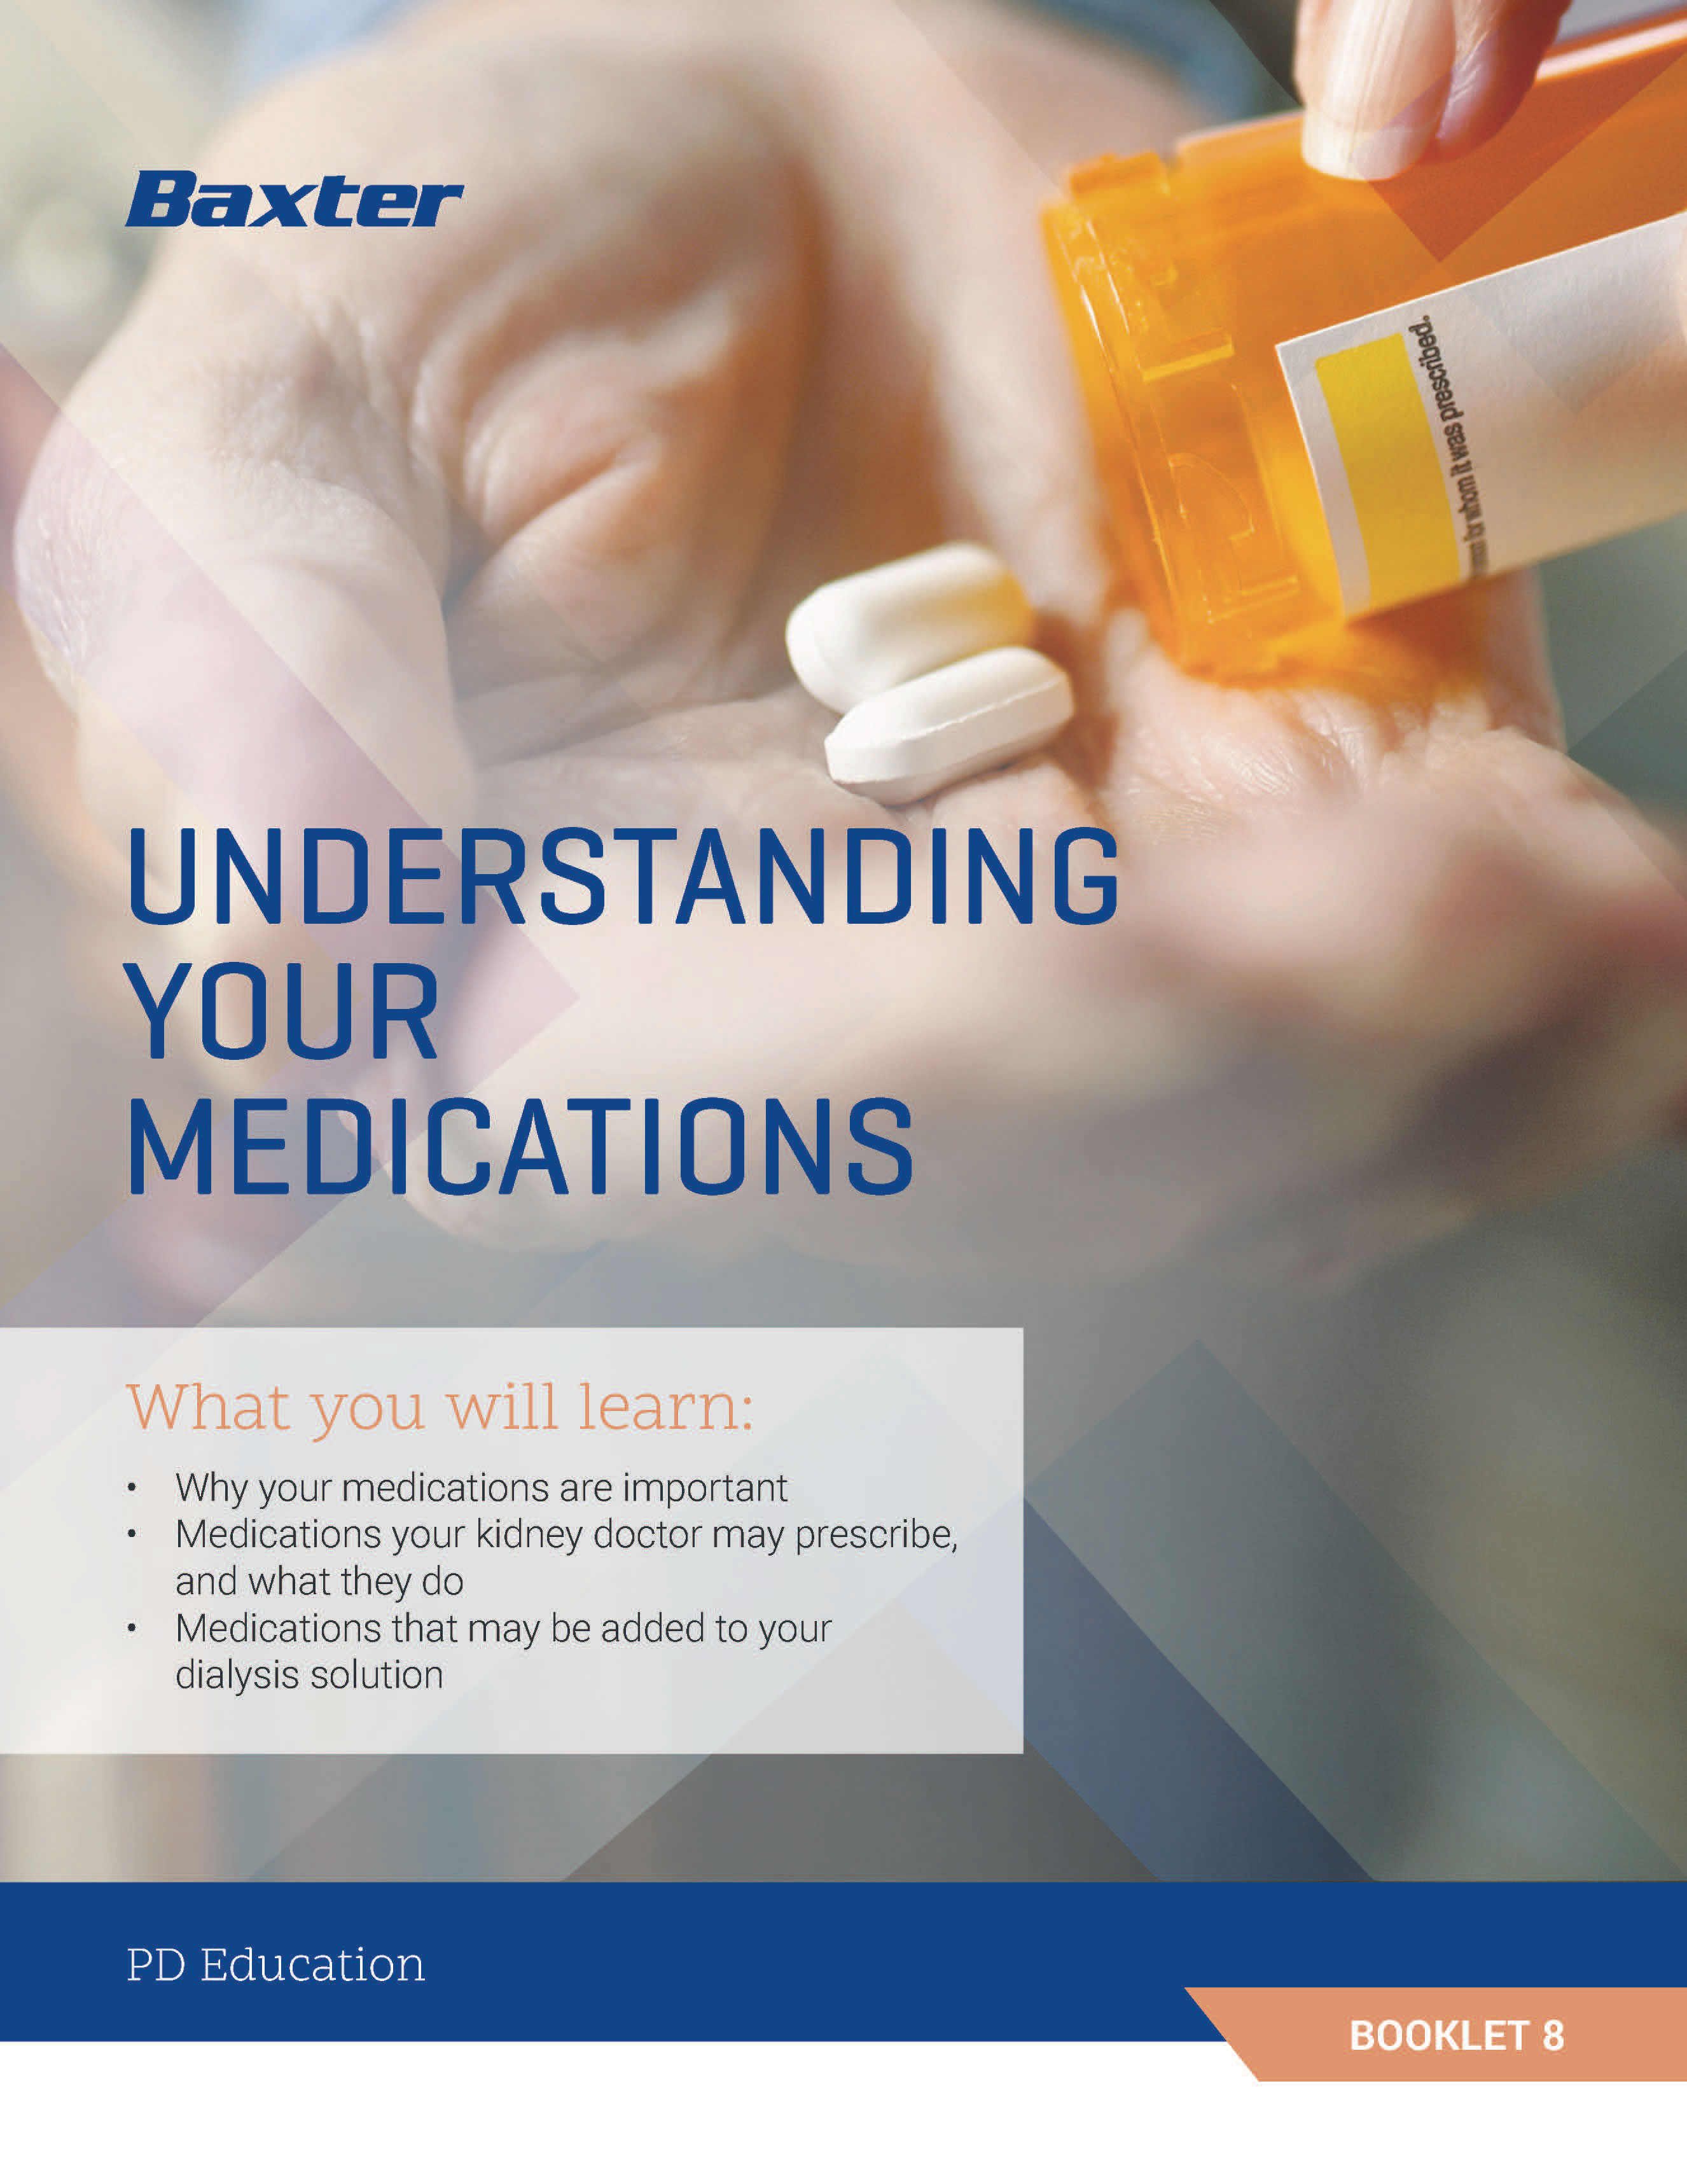 Open Booklet8 Medications EN 1